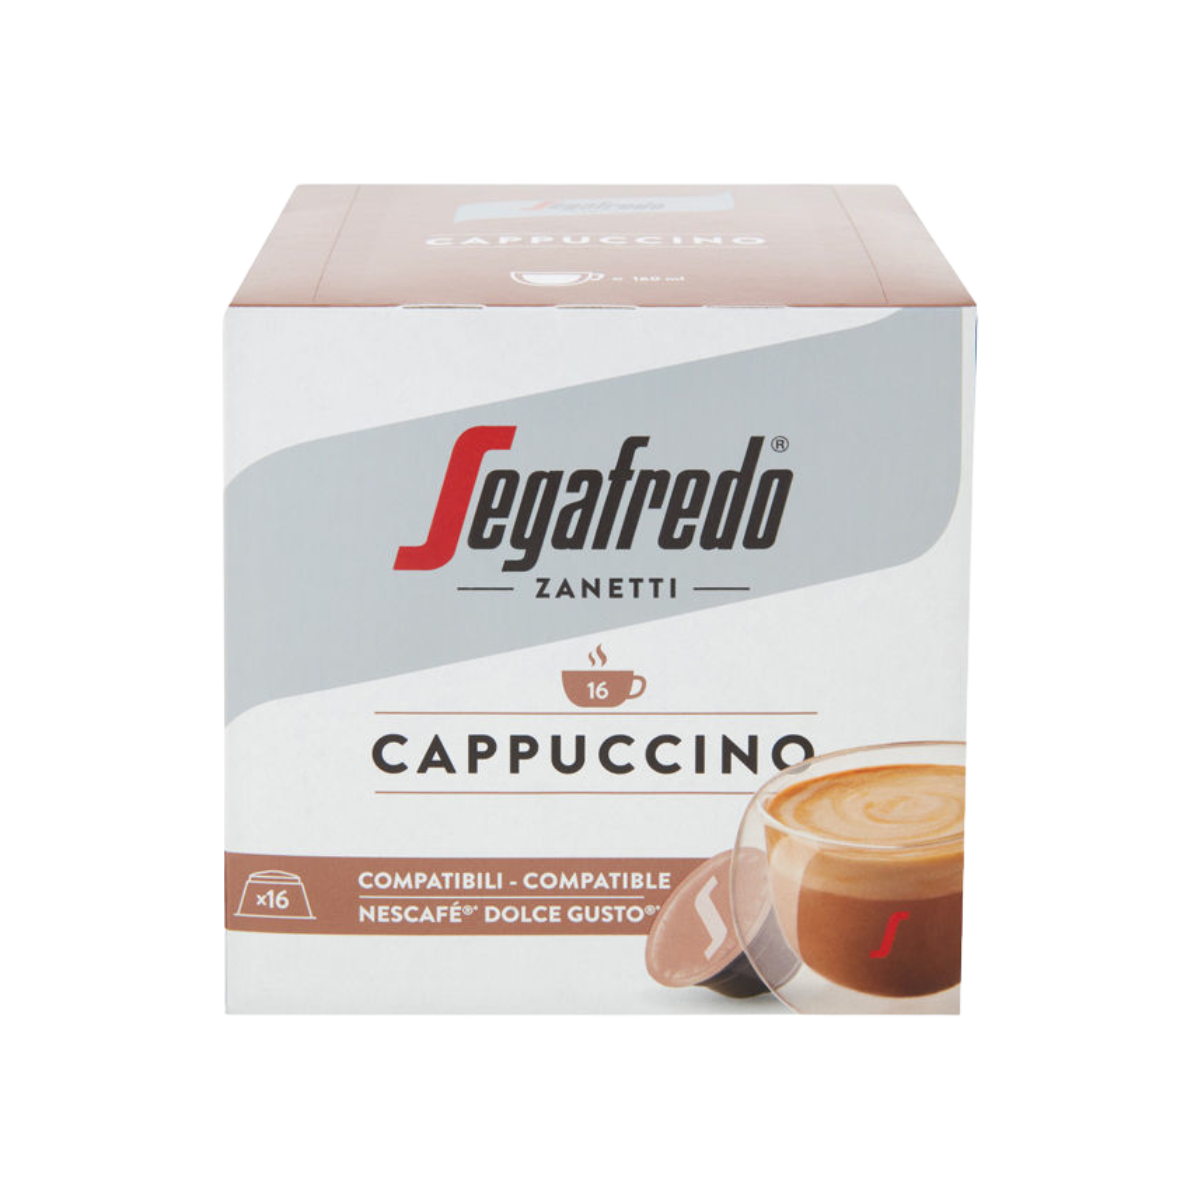 Cappuccino Coffee Capsule (Dolce Gusto® Compatible Capsule)